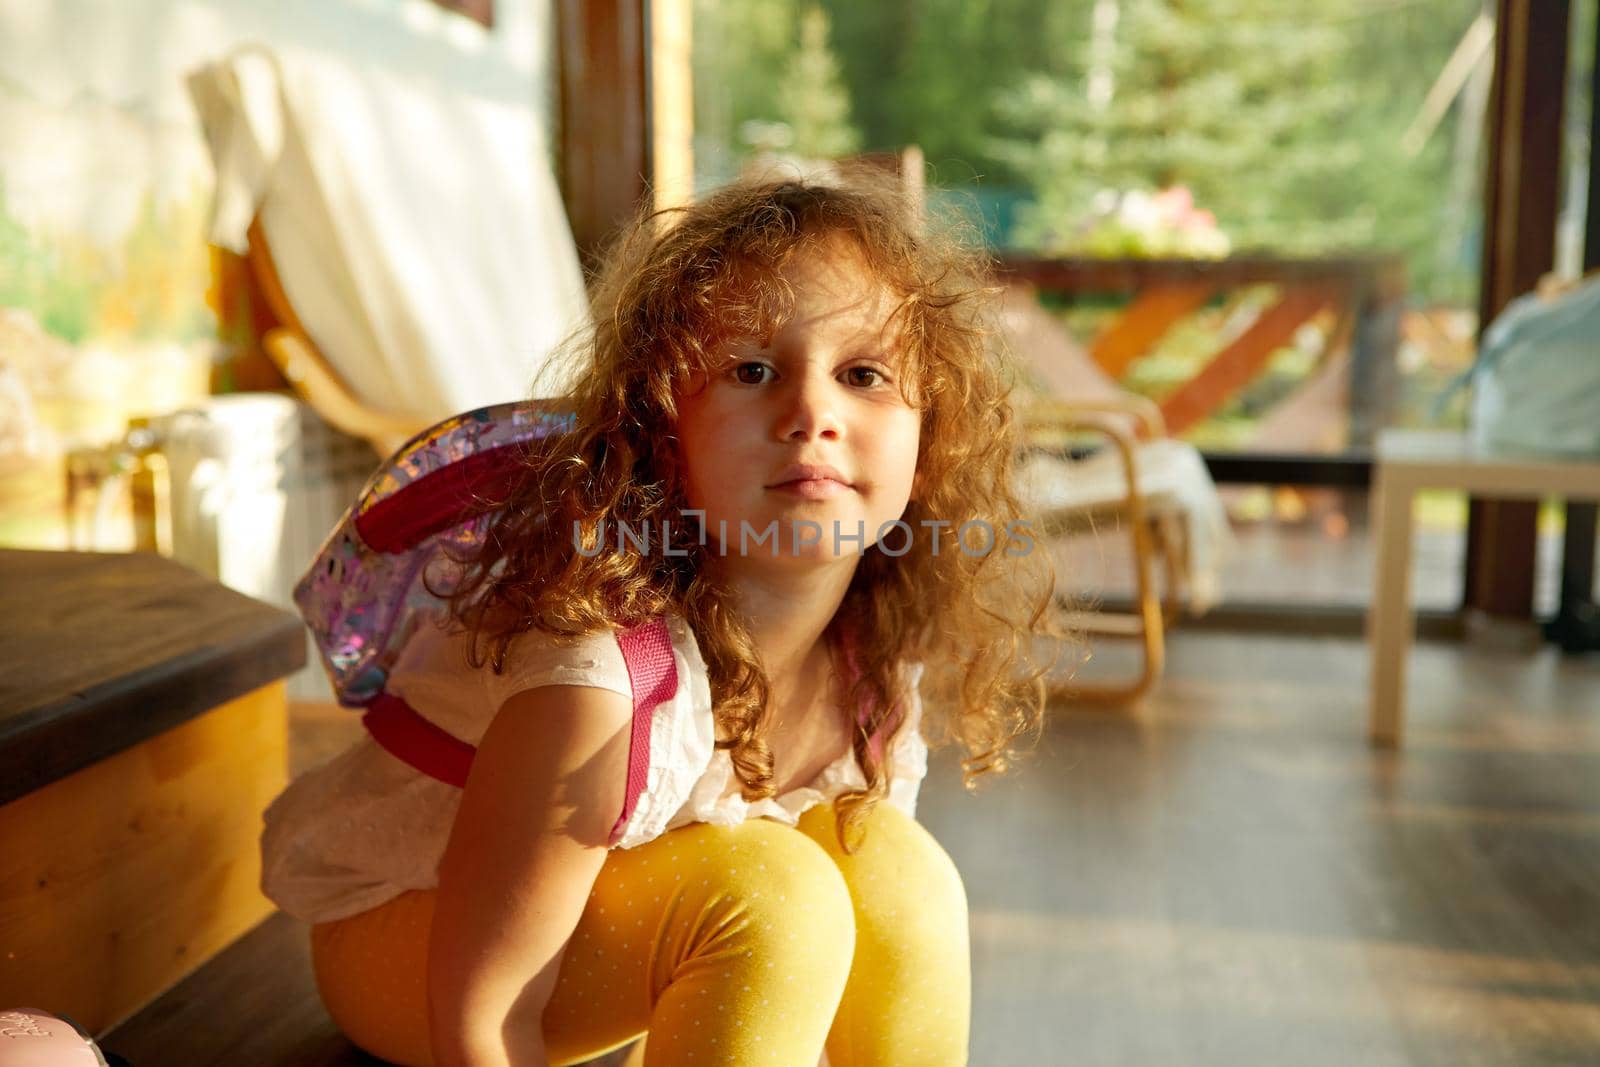 Cute girl goes back to school in sunlit room by Demkat